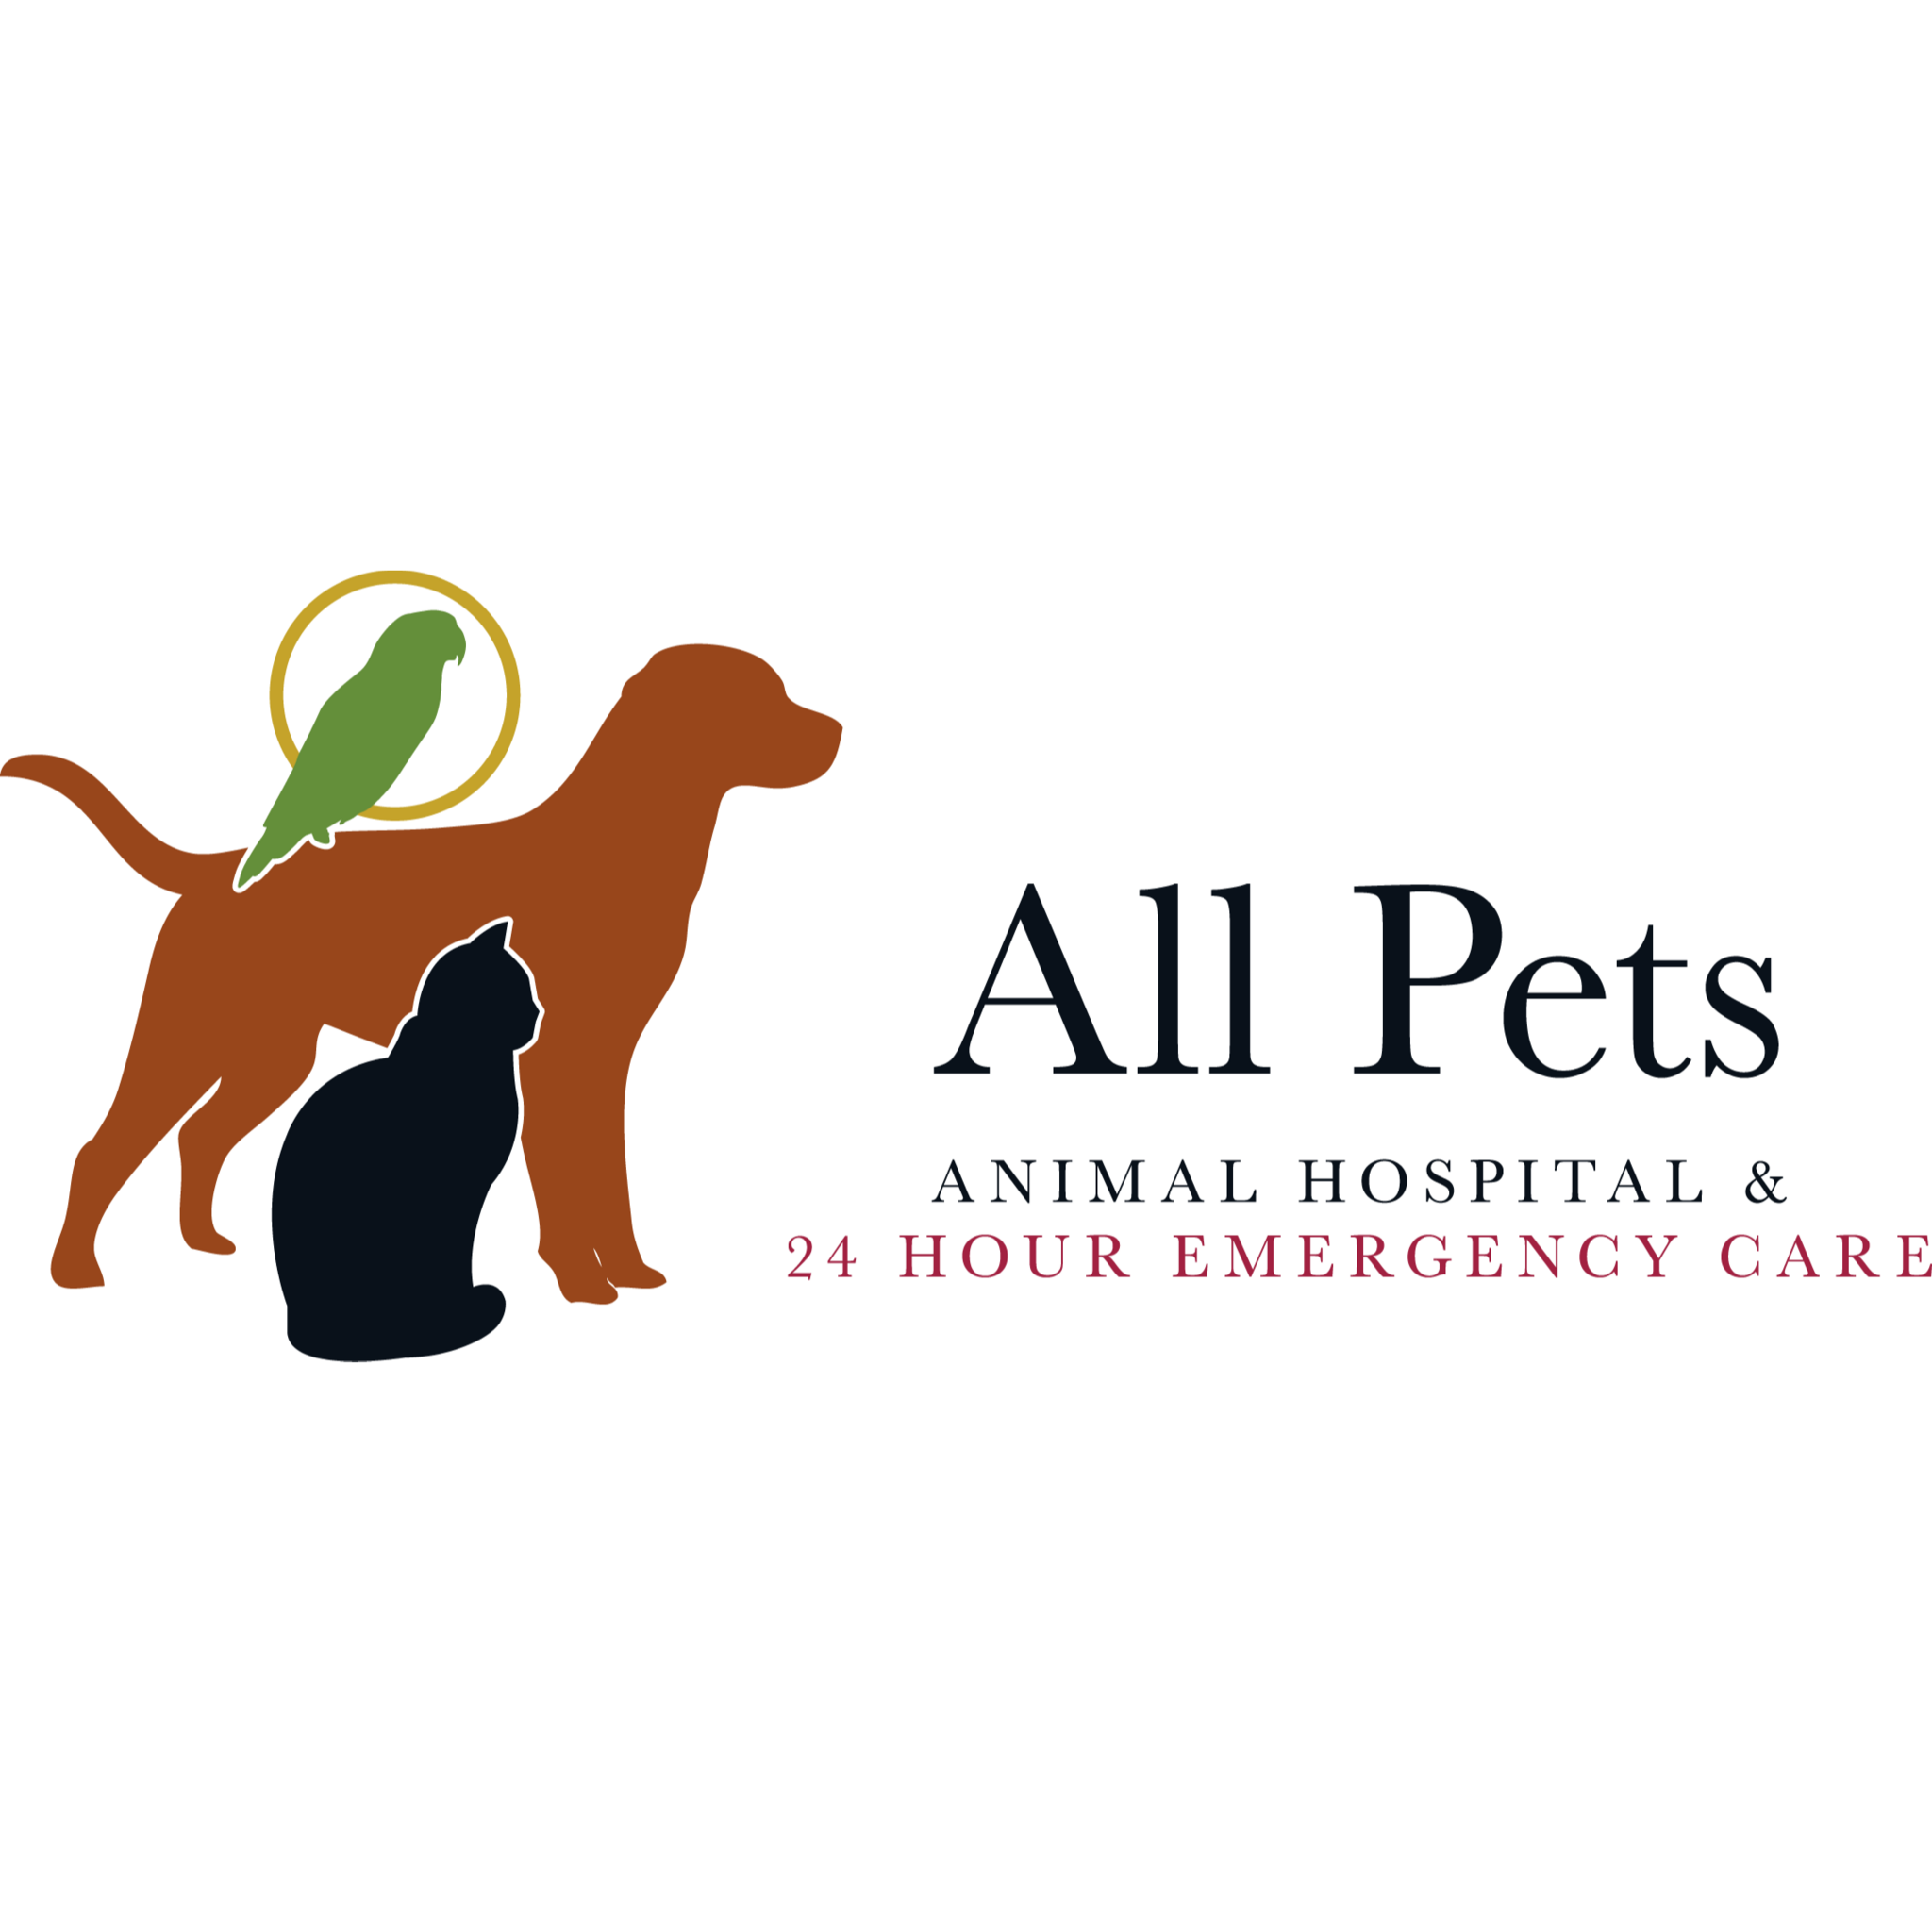 All Pets Animal Hospital & 24 Hour Emergency Care - Katy, TX - Nextdoor